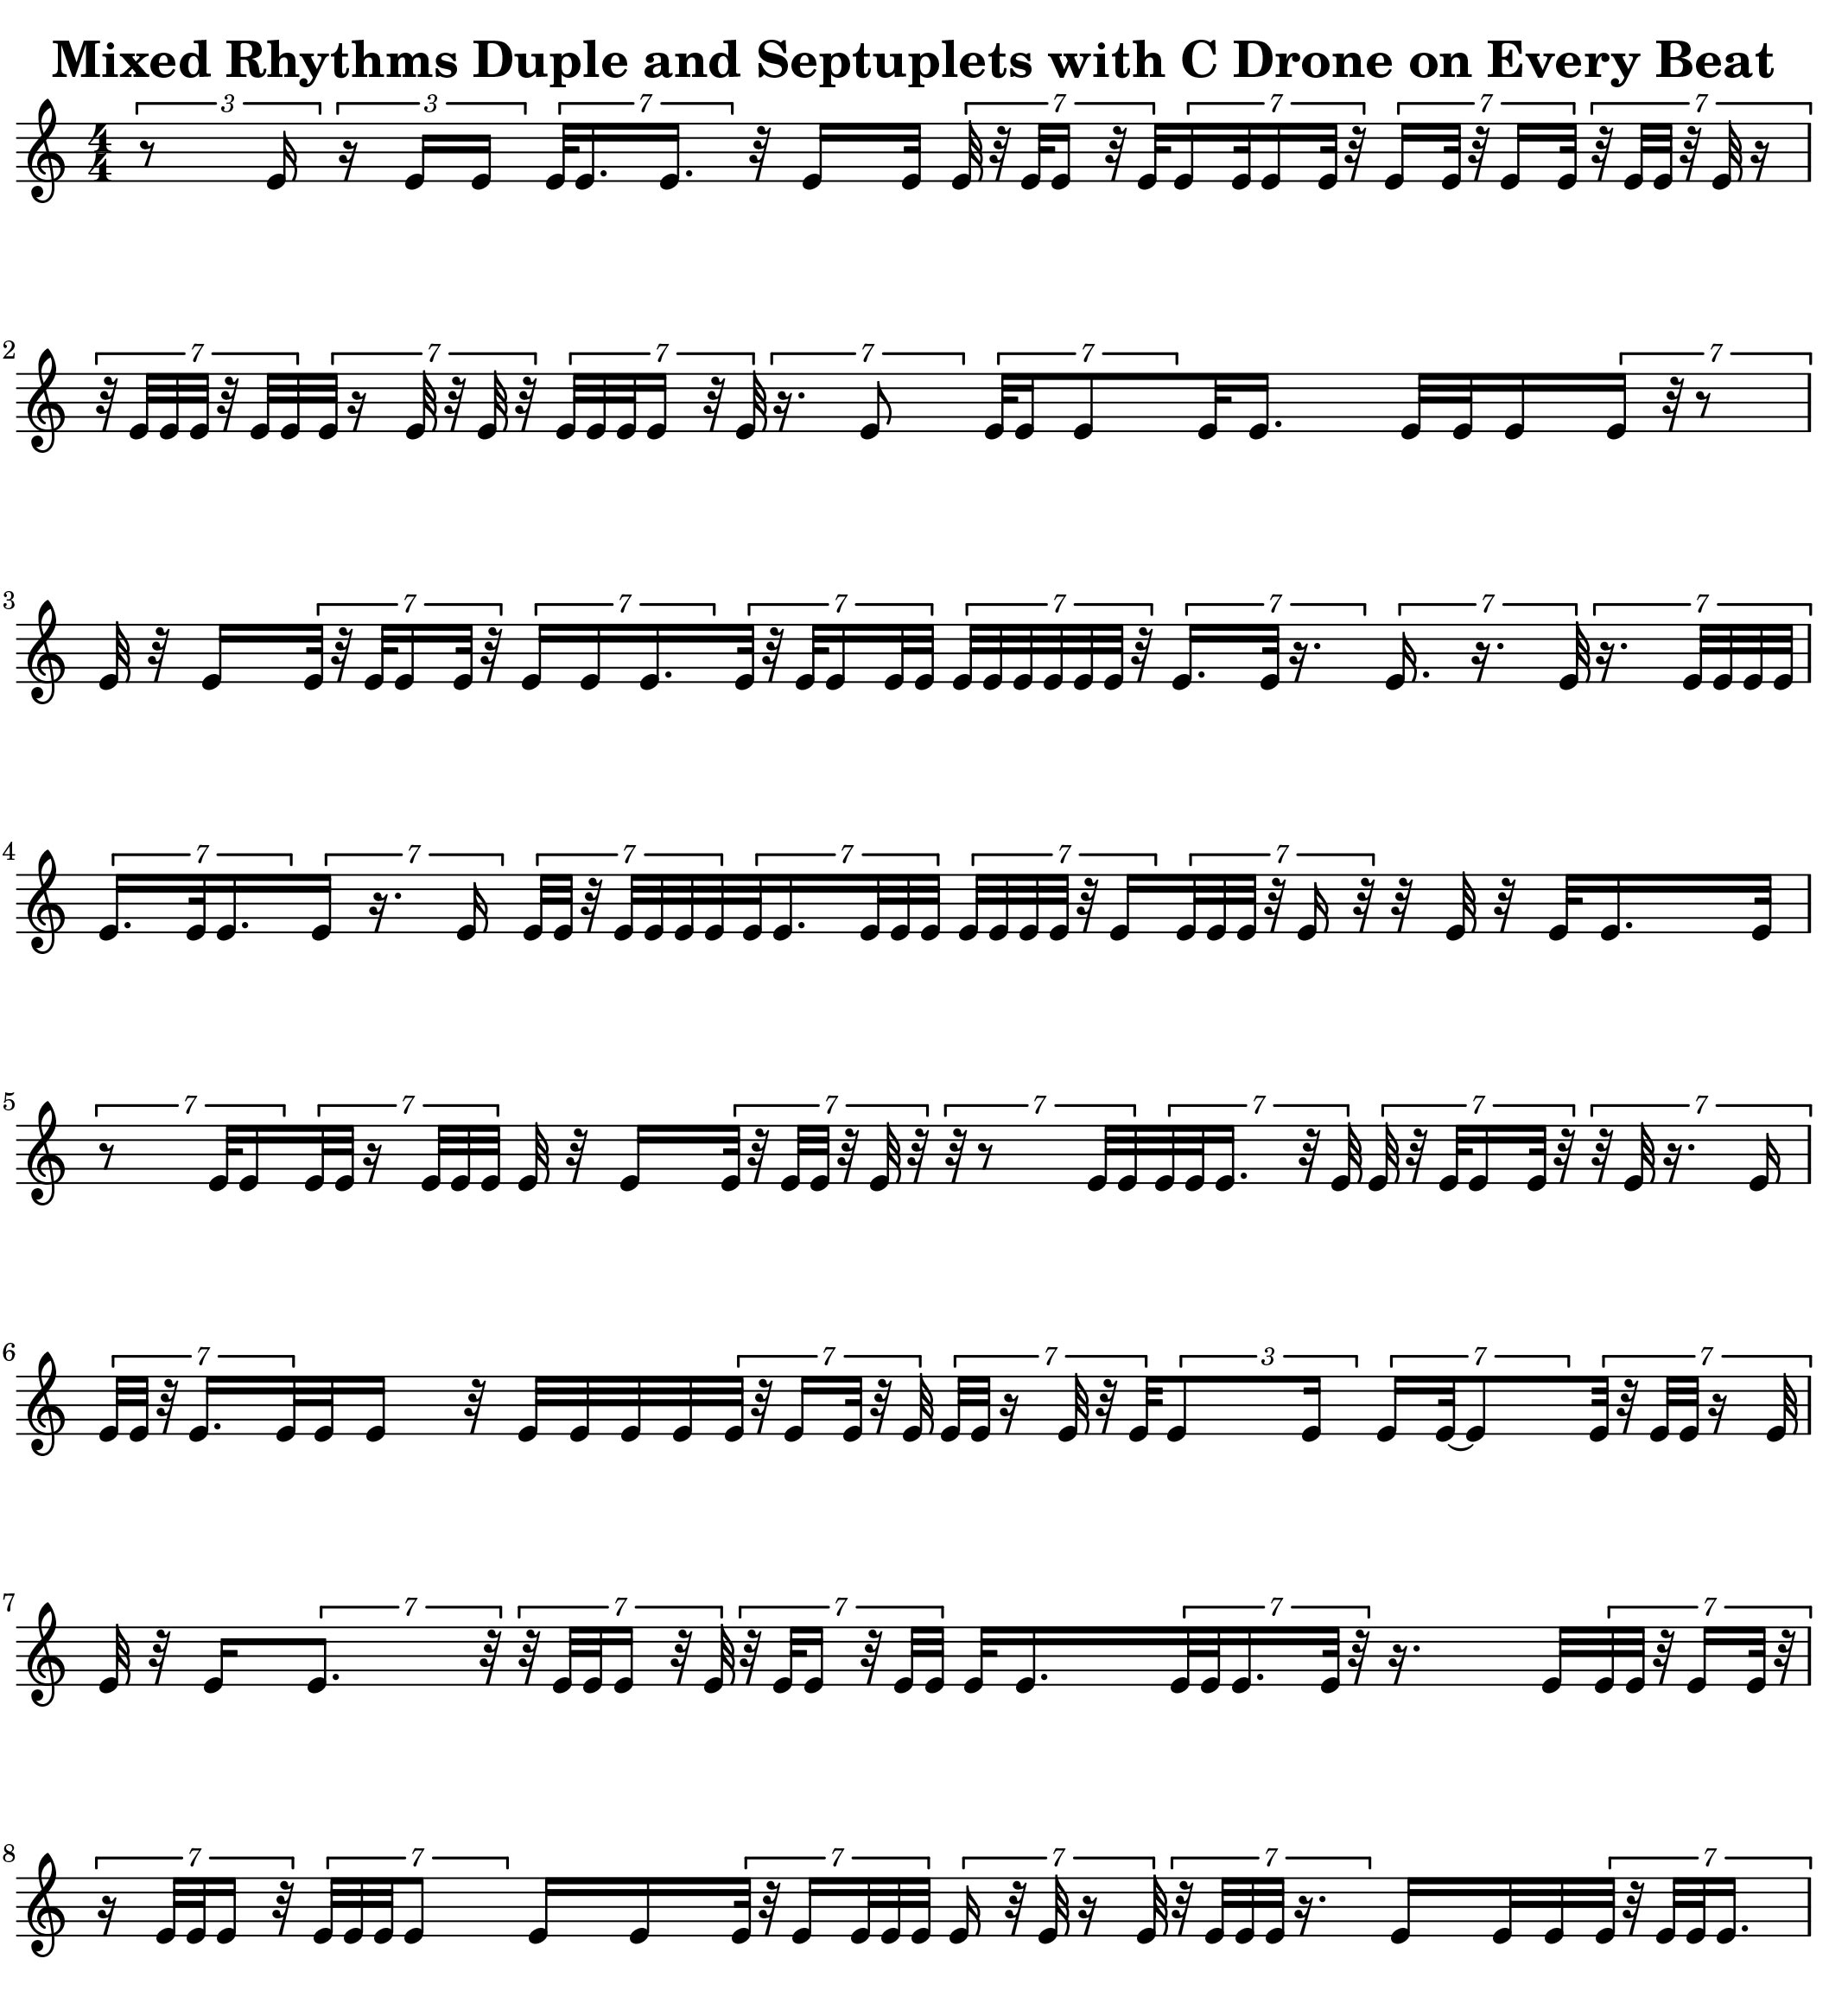 Rhythms Volume 11 Thirty Second Note Duplet and Septuplet Rhythms